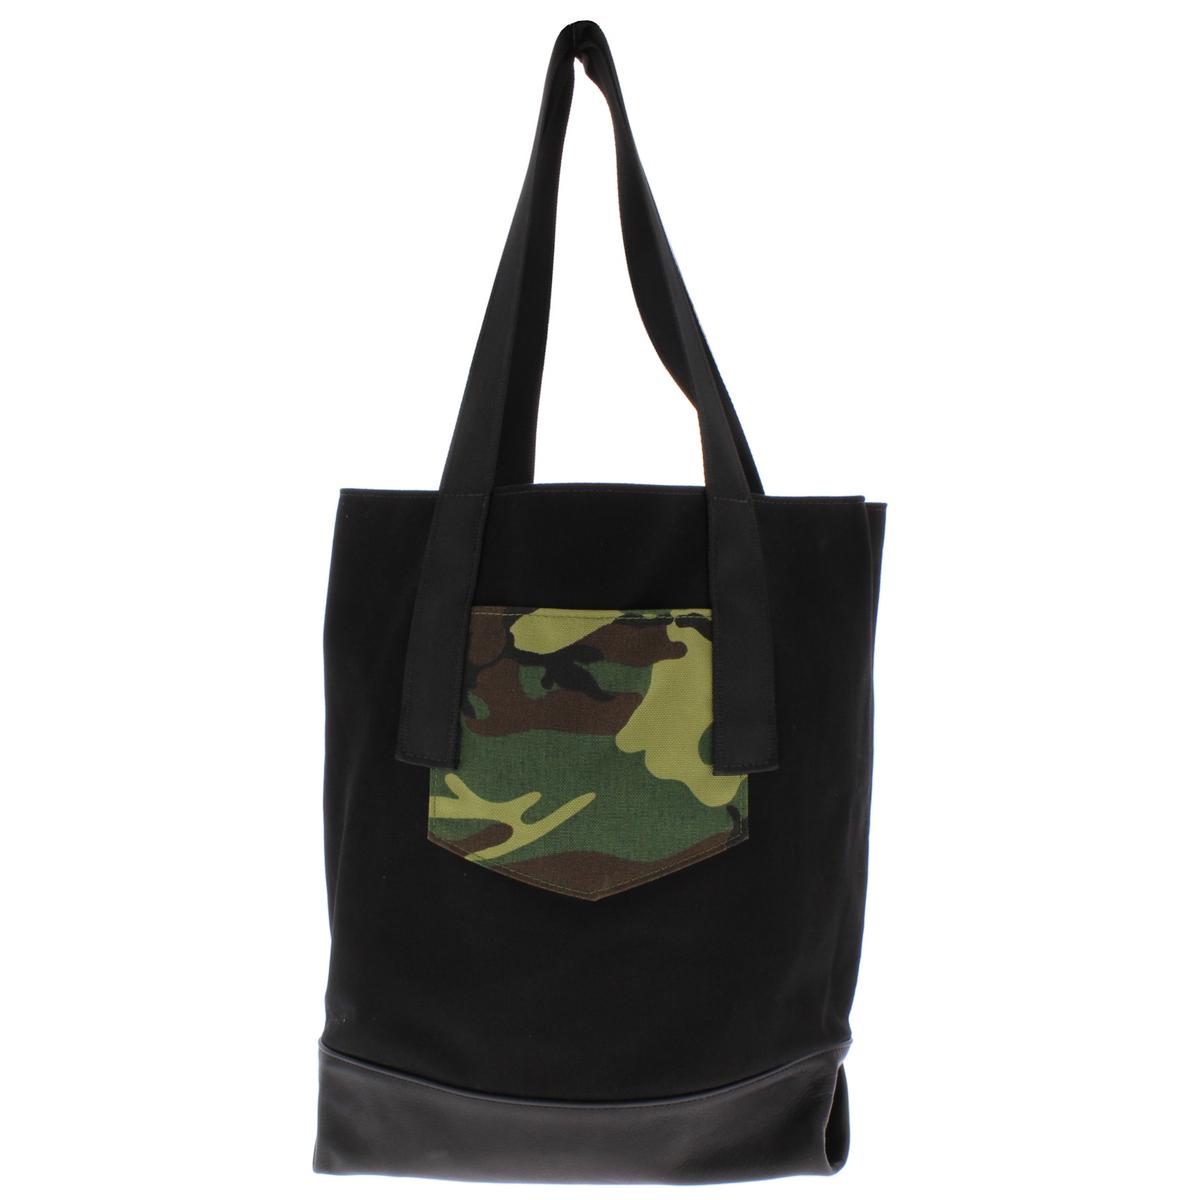 Designer Womens Black Canvas Camouflage Tote Handbag Purse Large BHFO 5710 | eBay